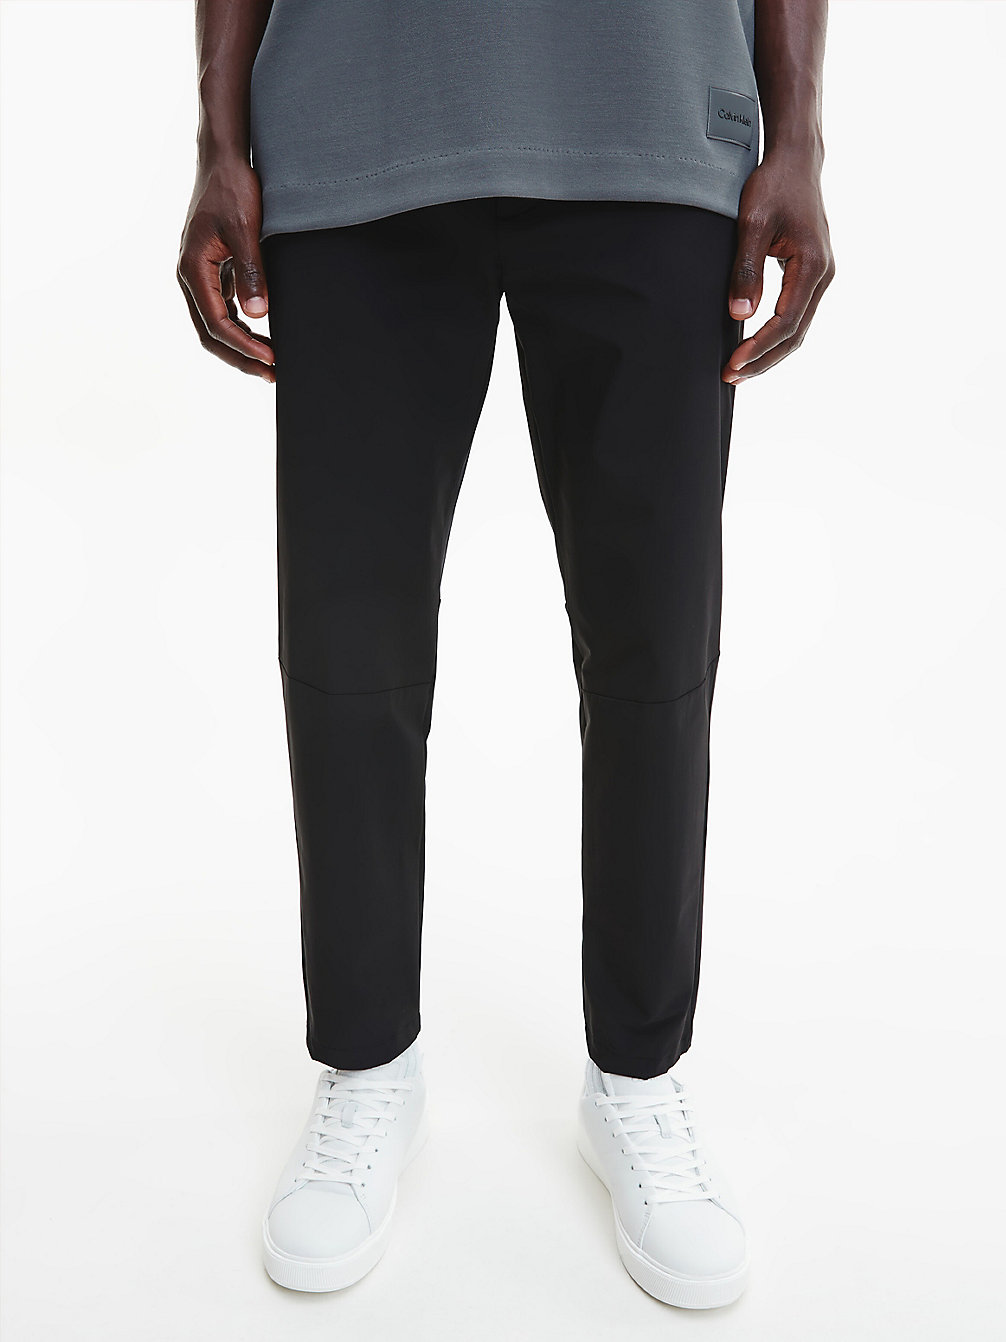 CK BLACK Twill-Stretchhose In Tapered Fit undefined Herren Calvin Klein